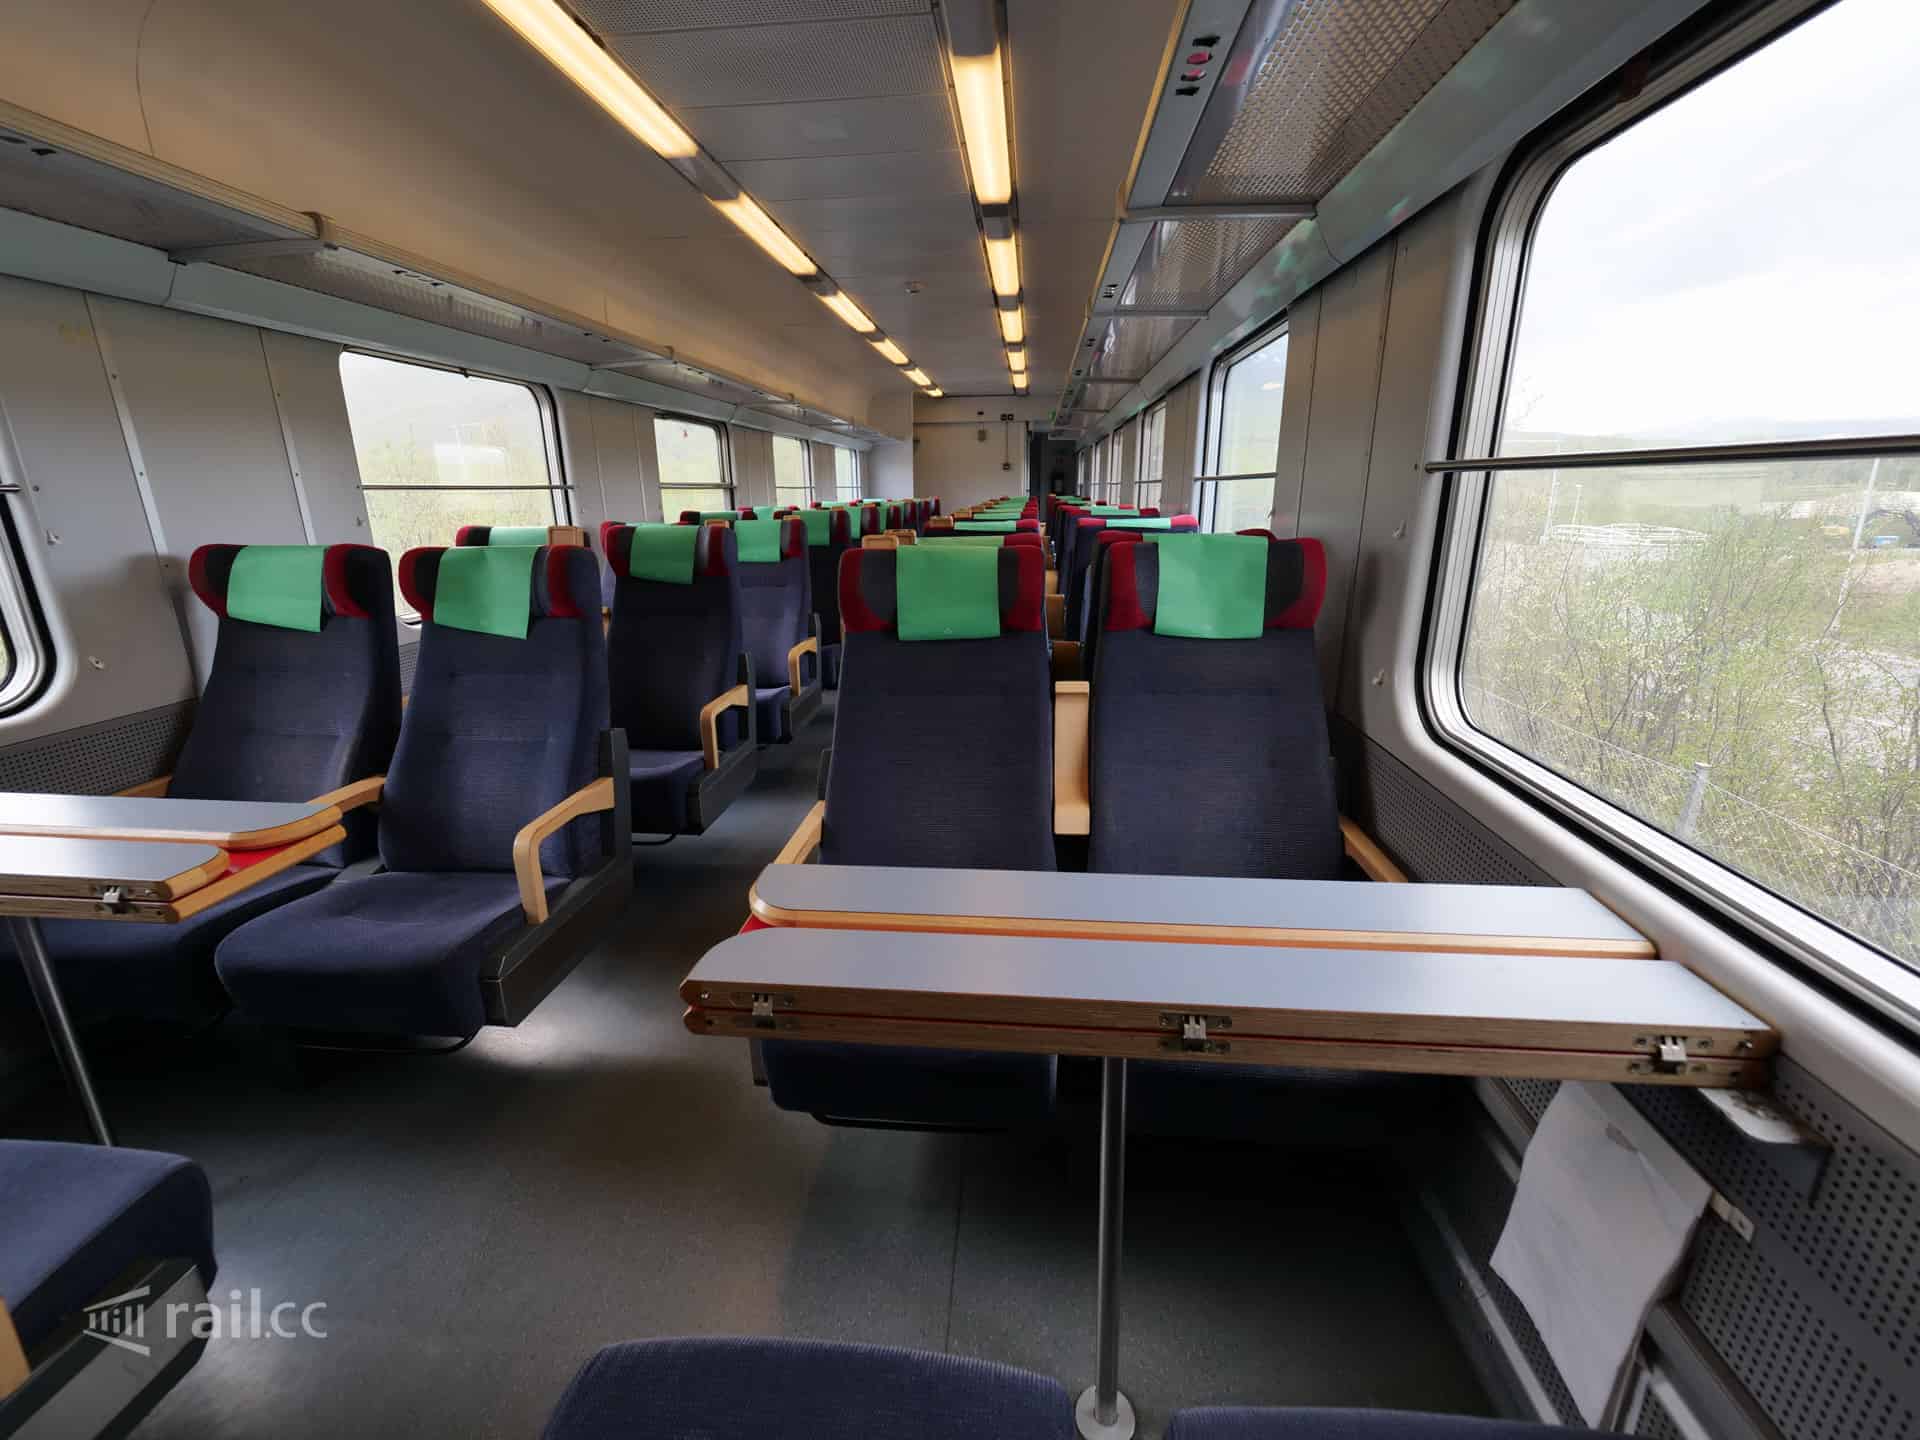 stockholm to kiruna train review